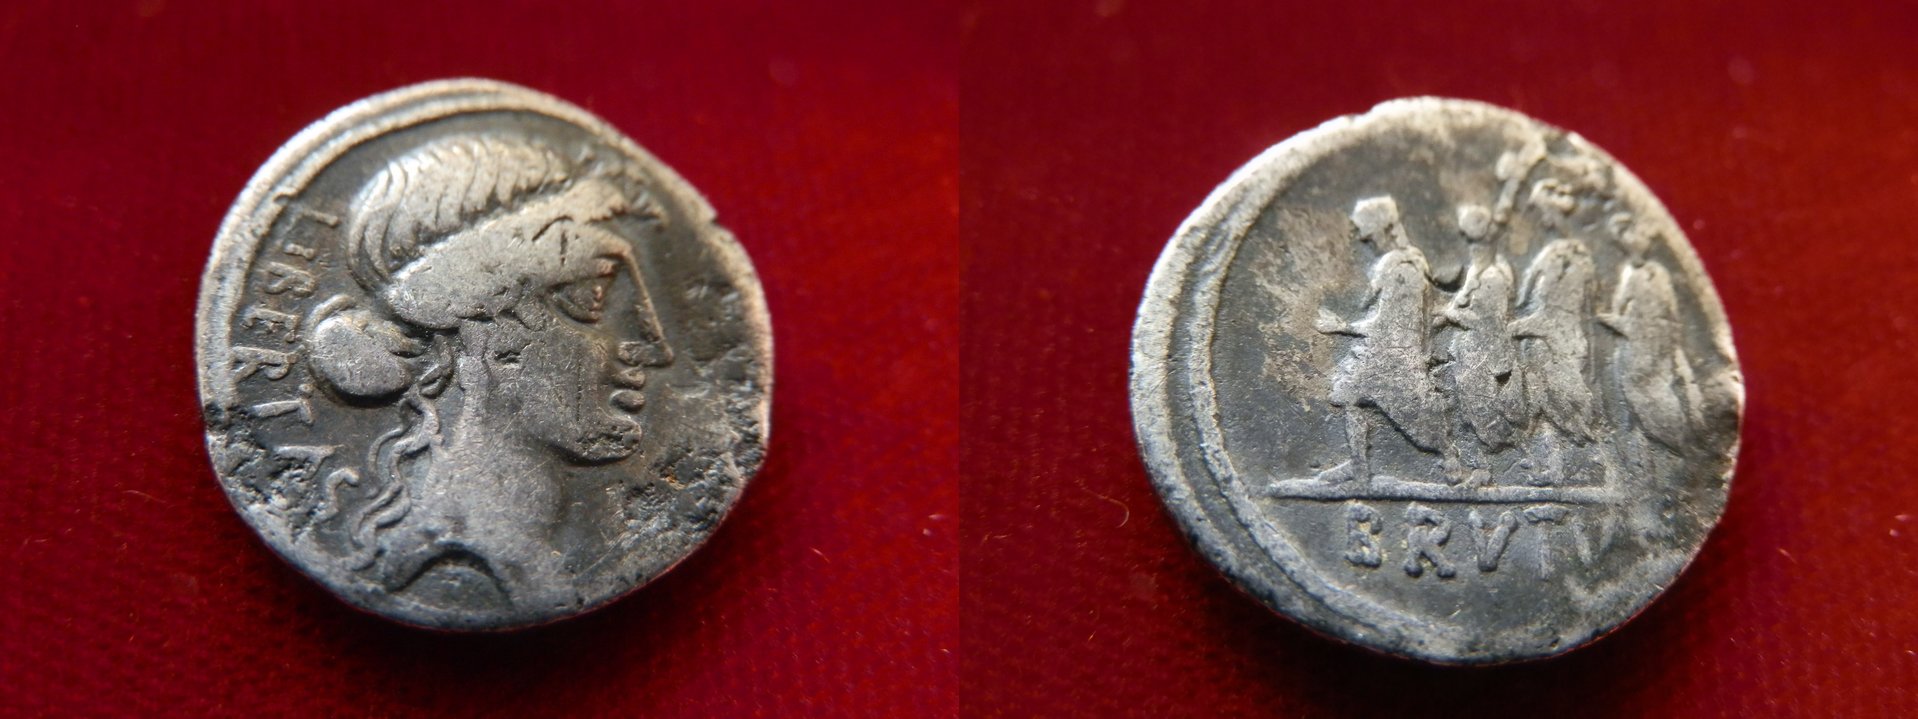 brutus denarius 2.jpg